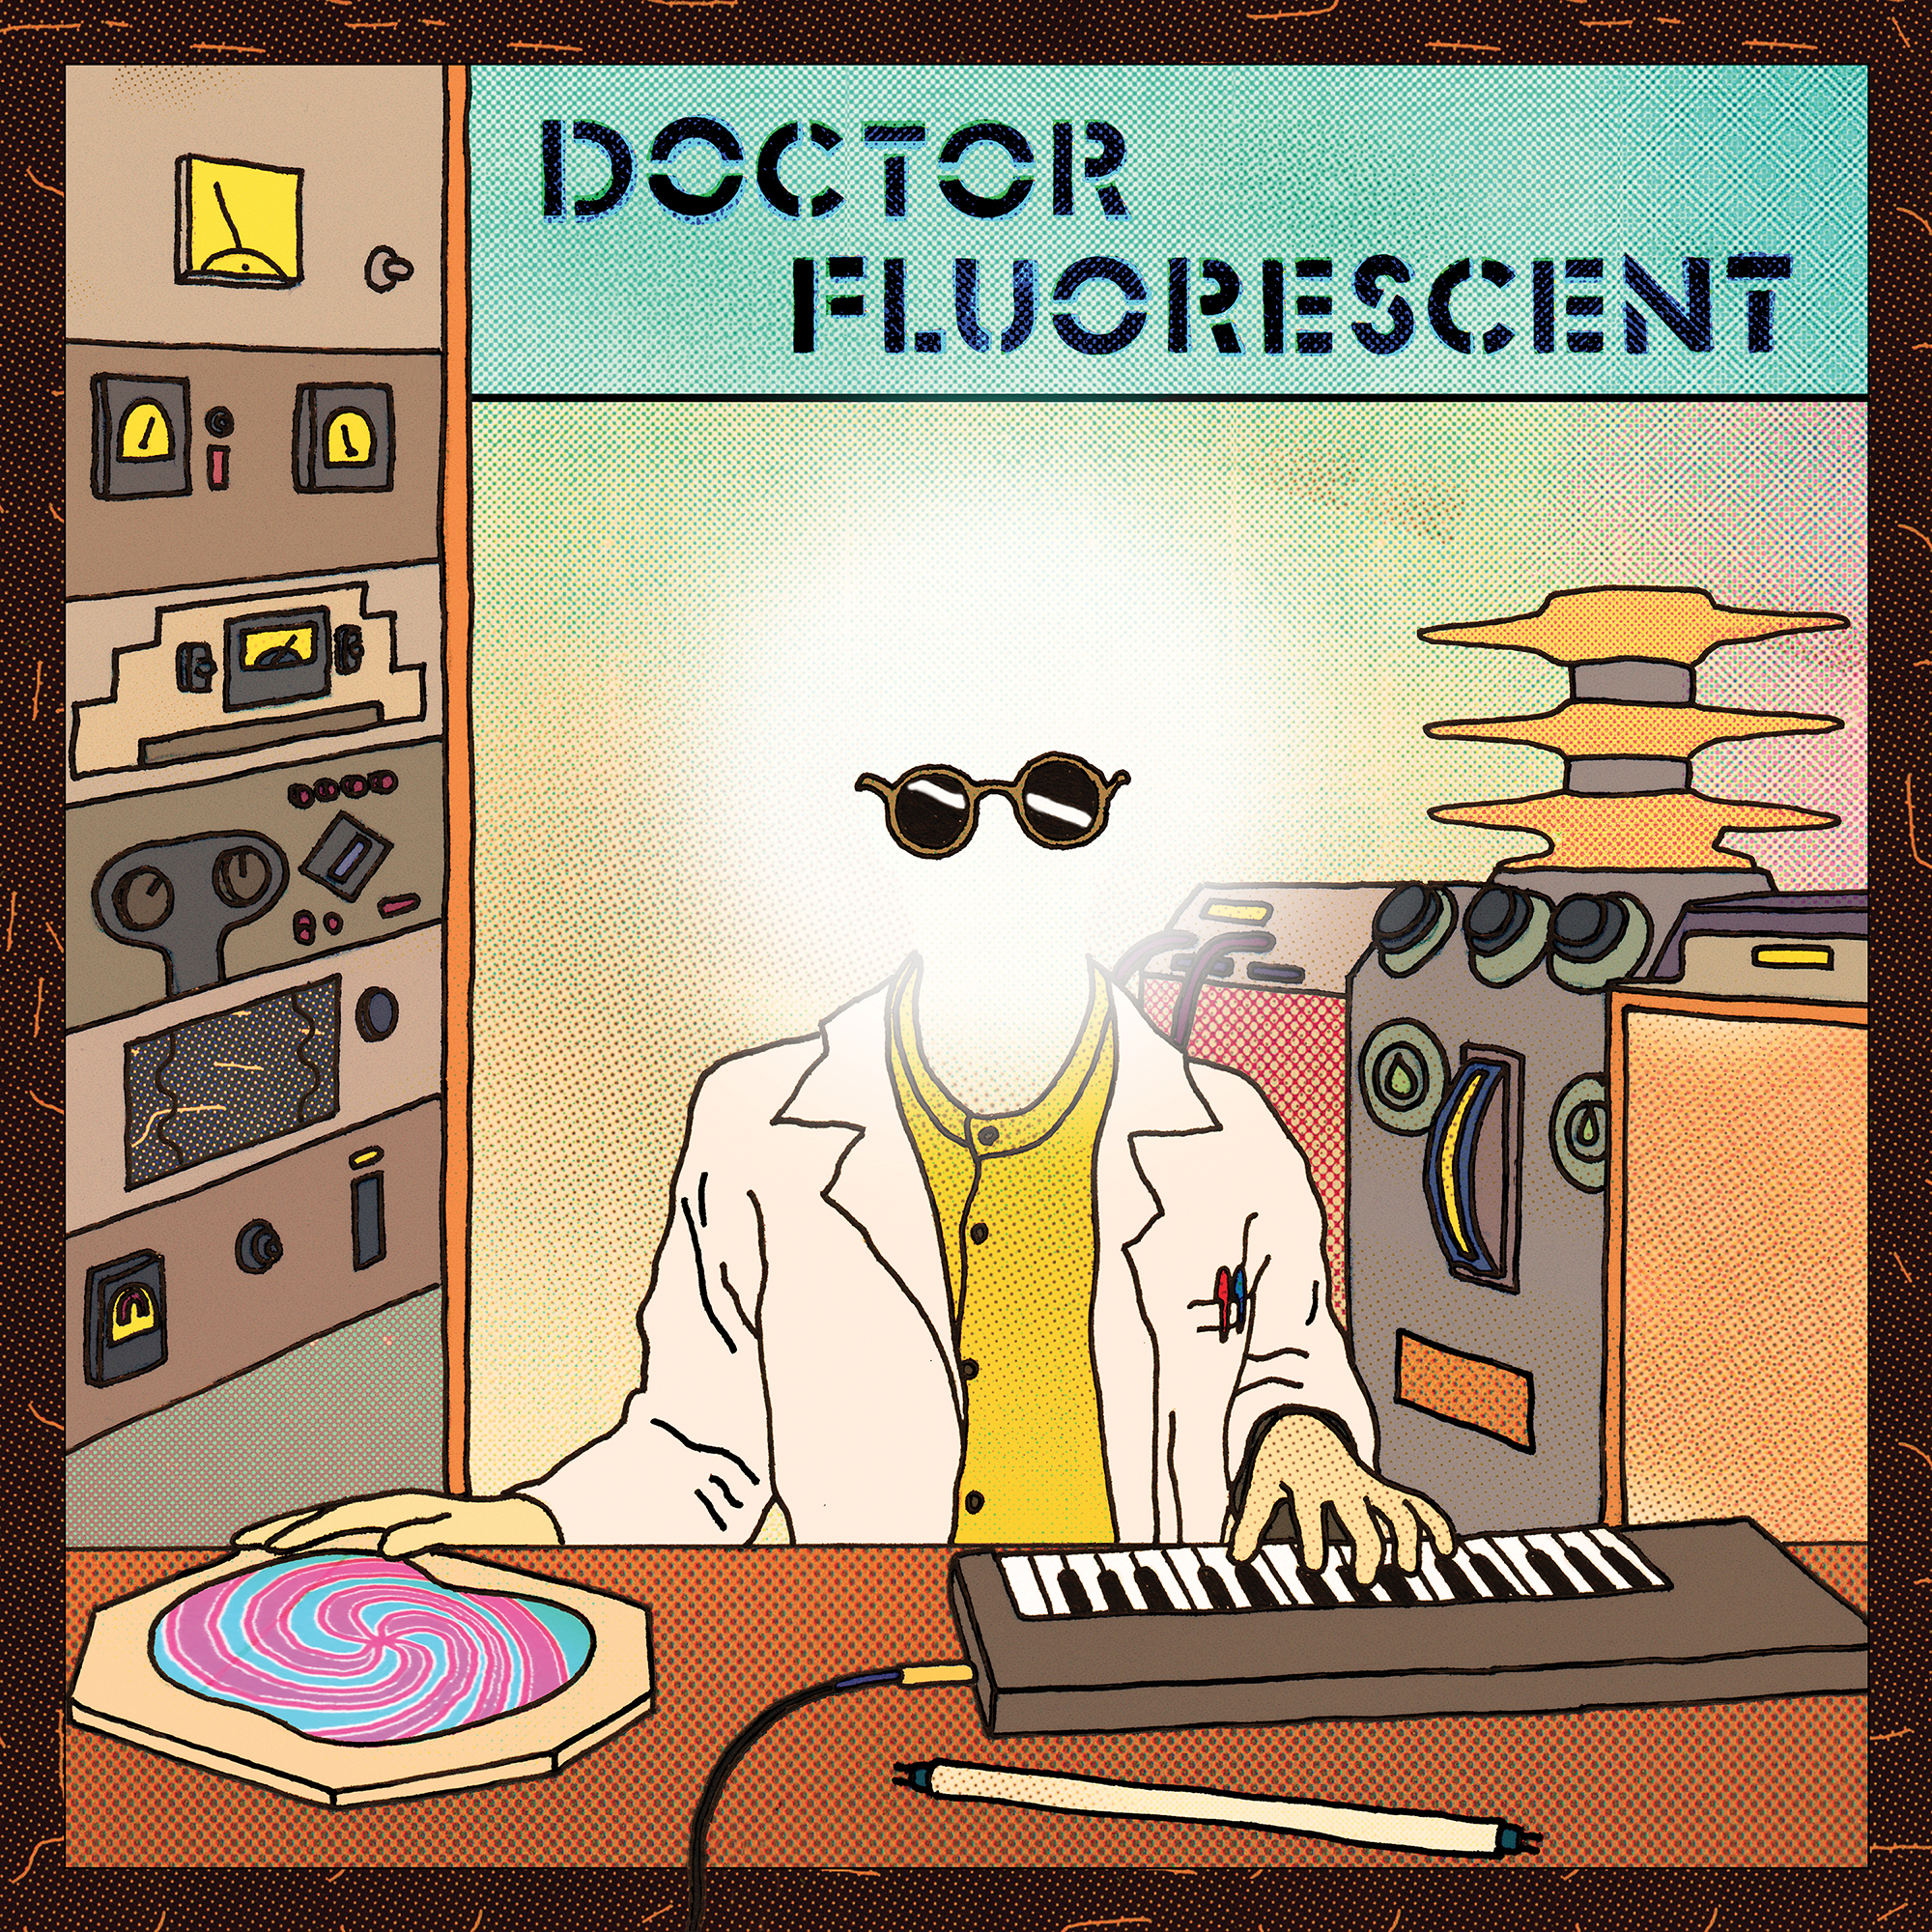 DOCTOR FLUORESCENT  - Doctor Fluorescent